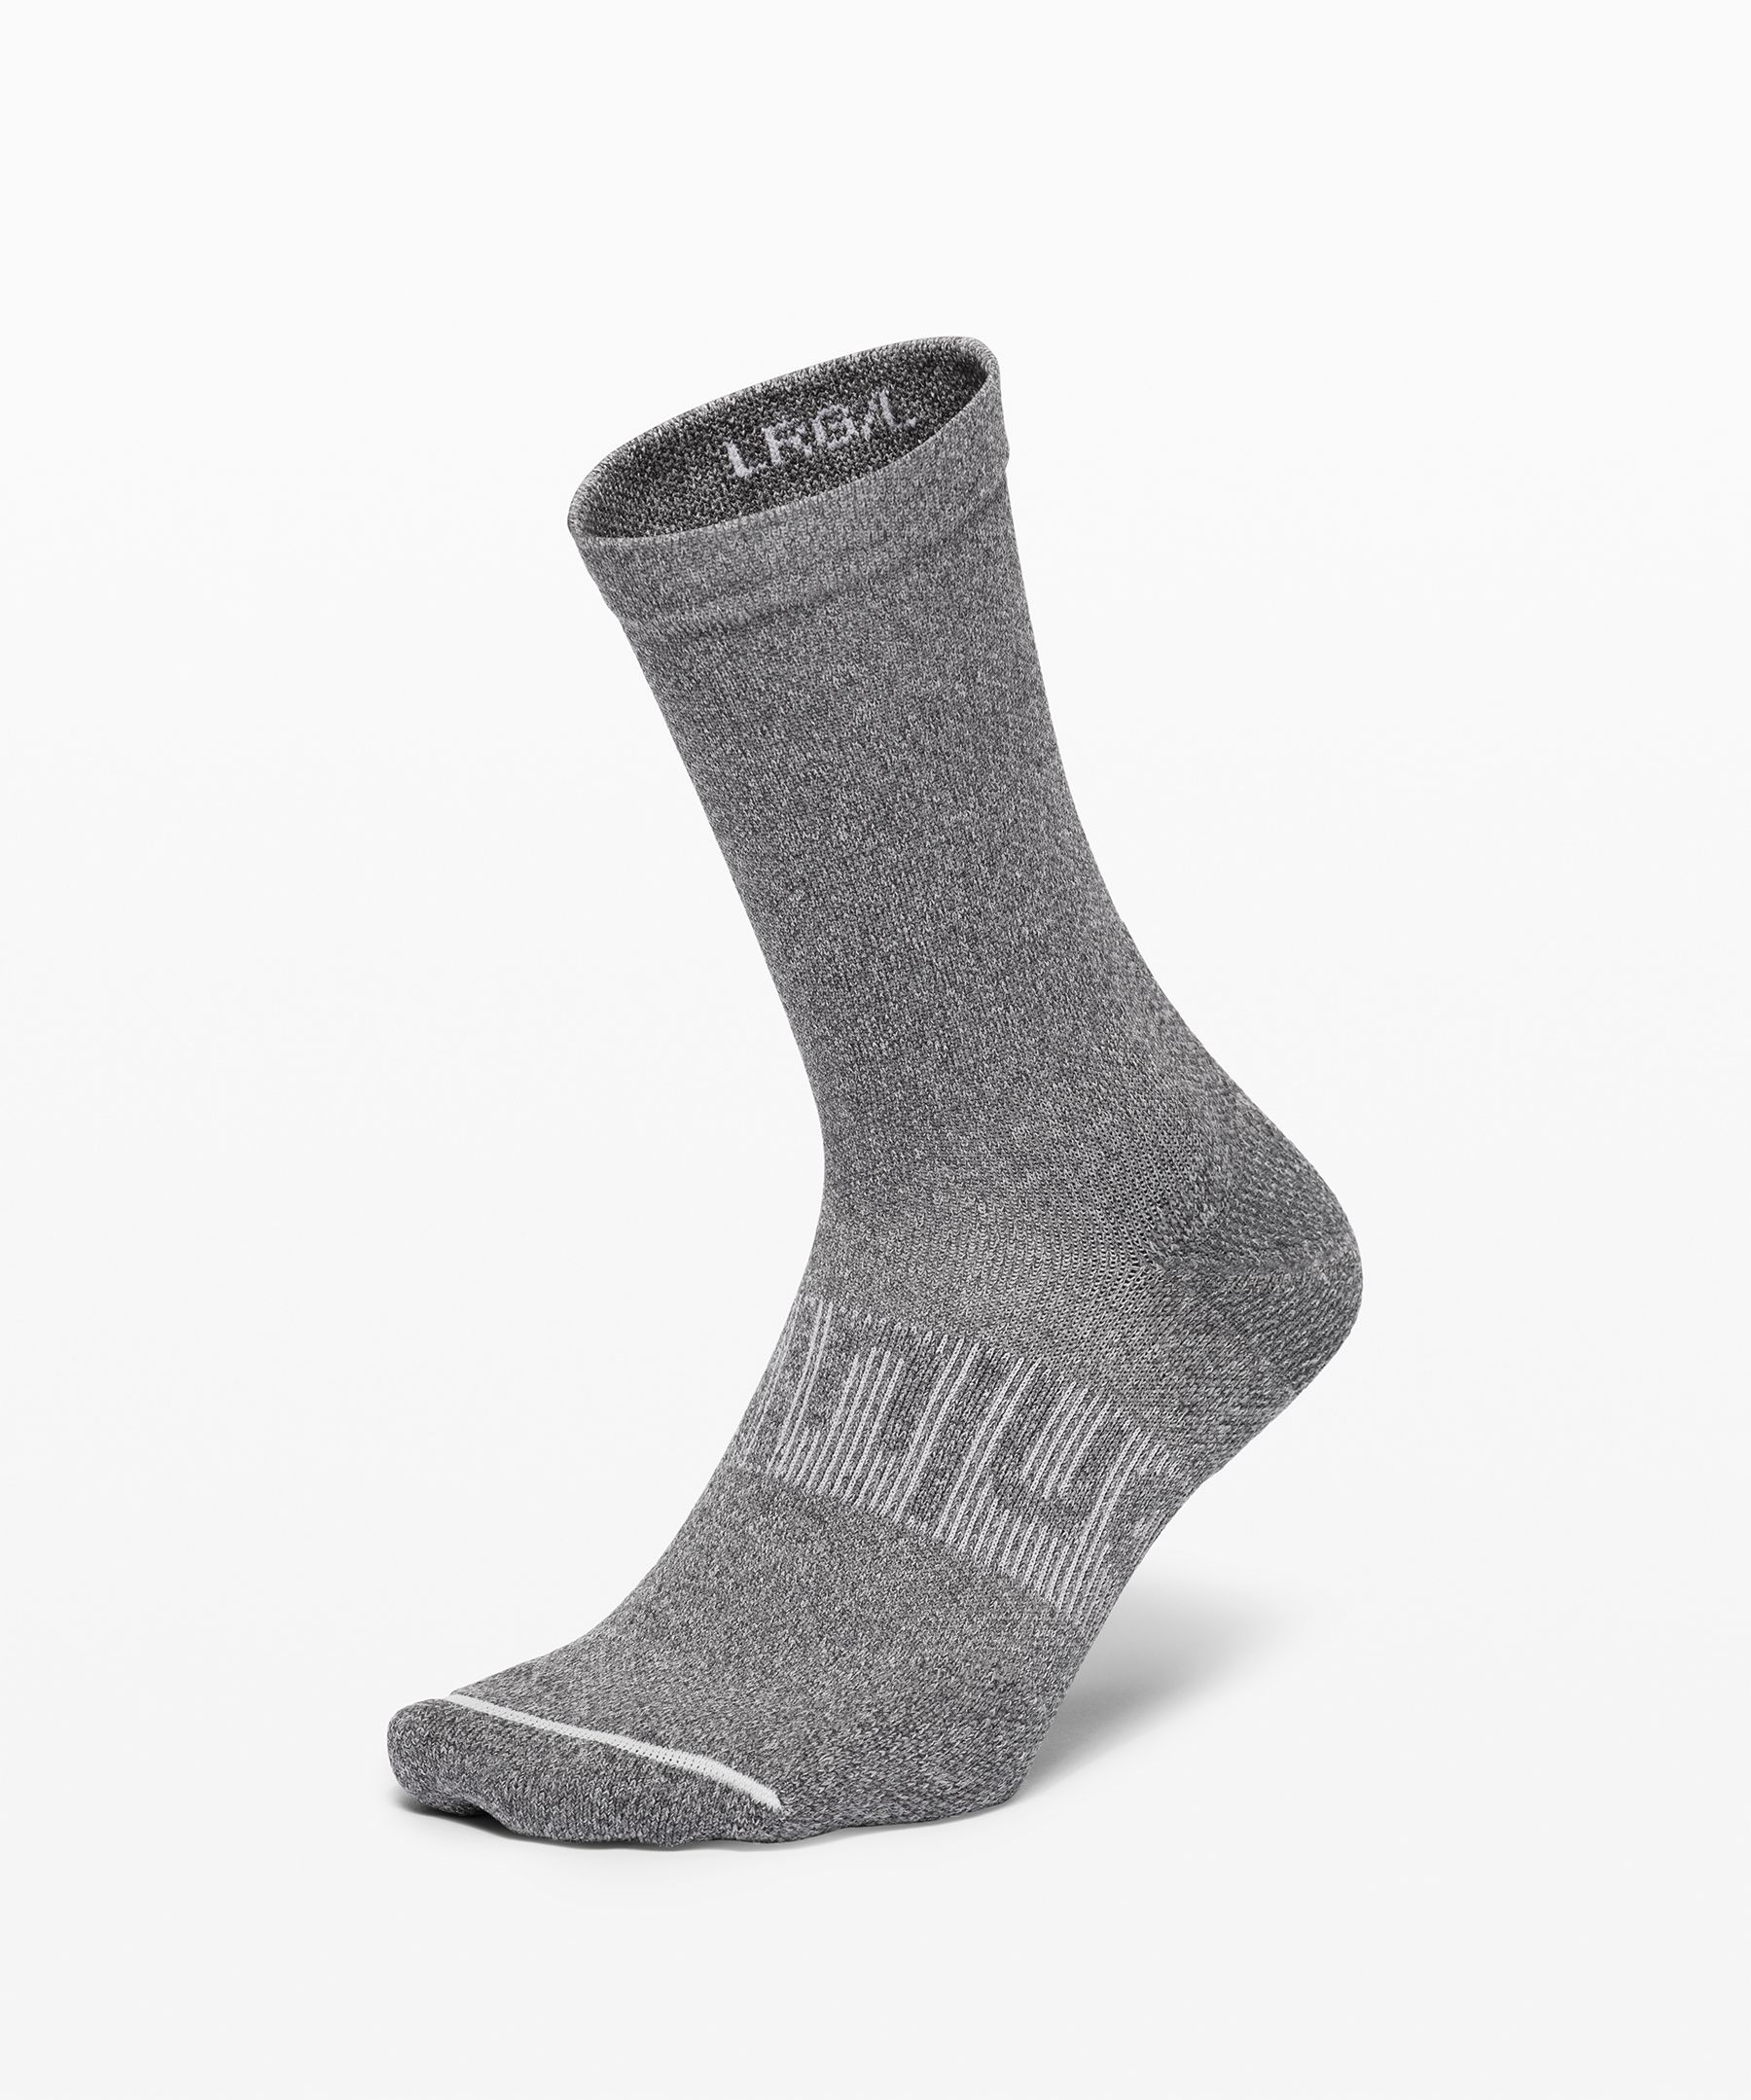 Lululemon Power Stride Crew Socks Anti-stink In Heathered Graphite Grey